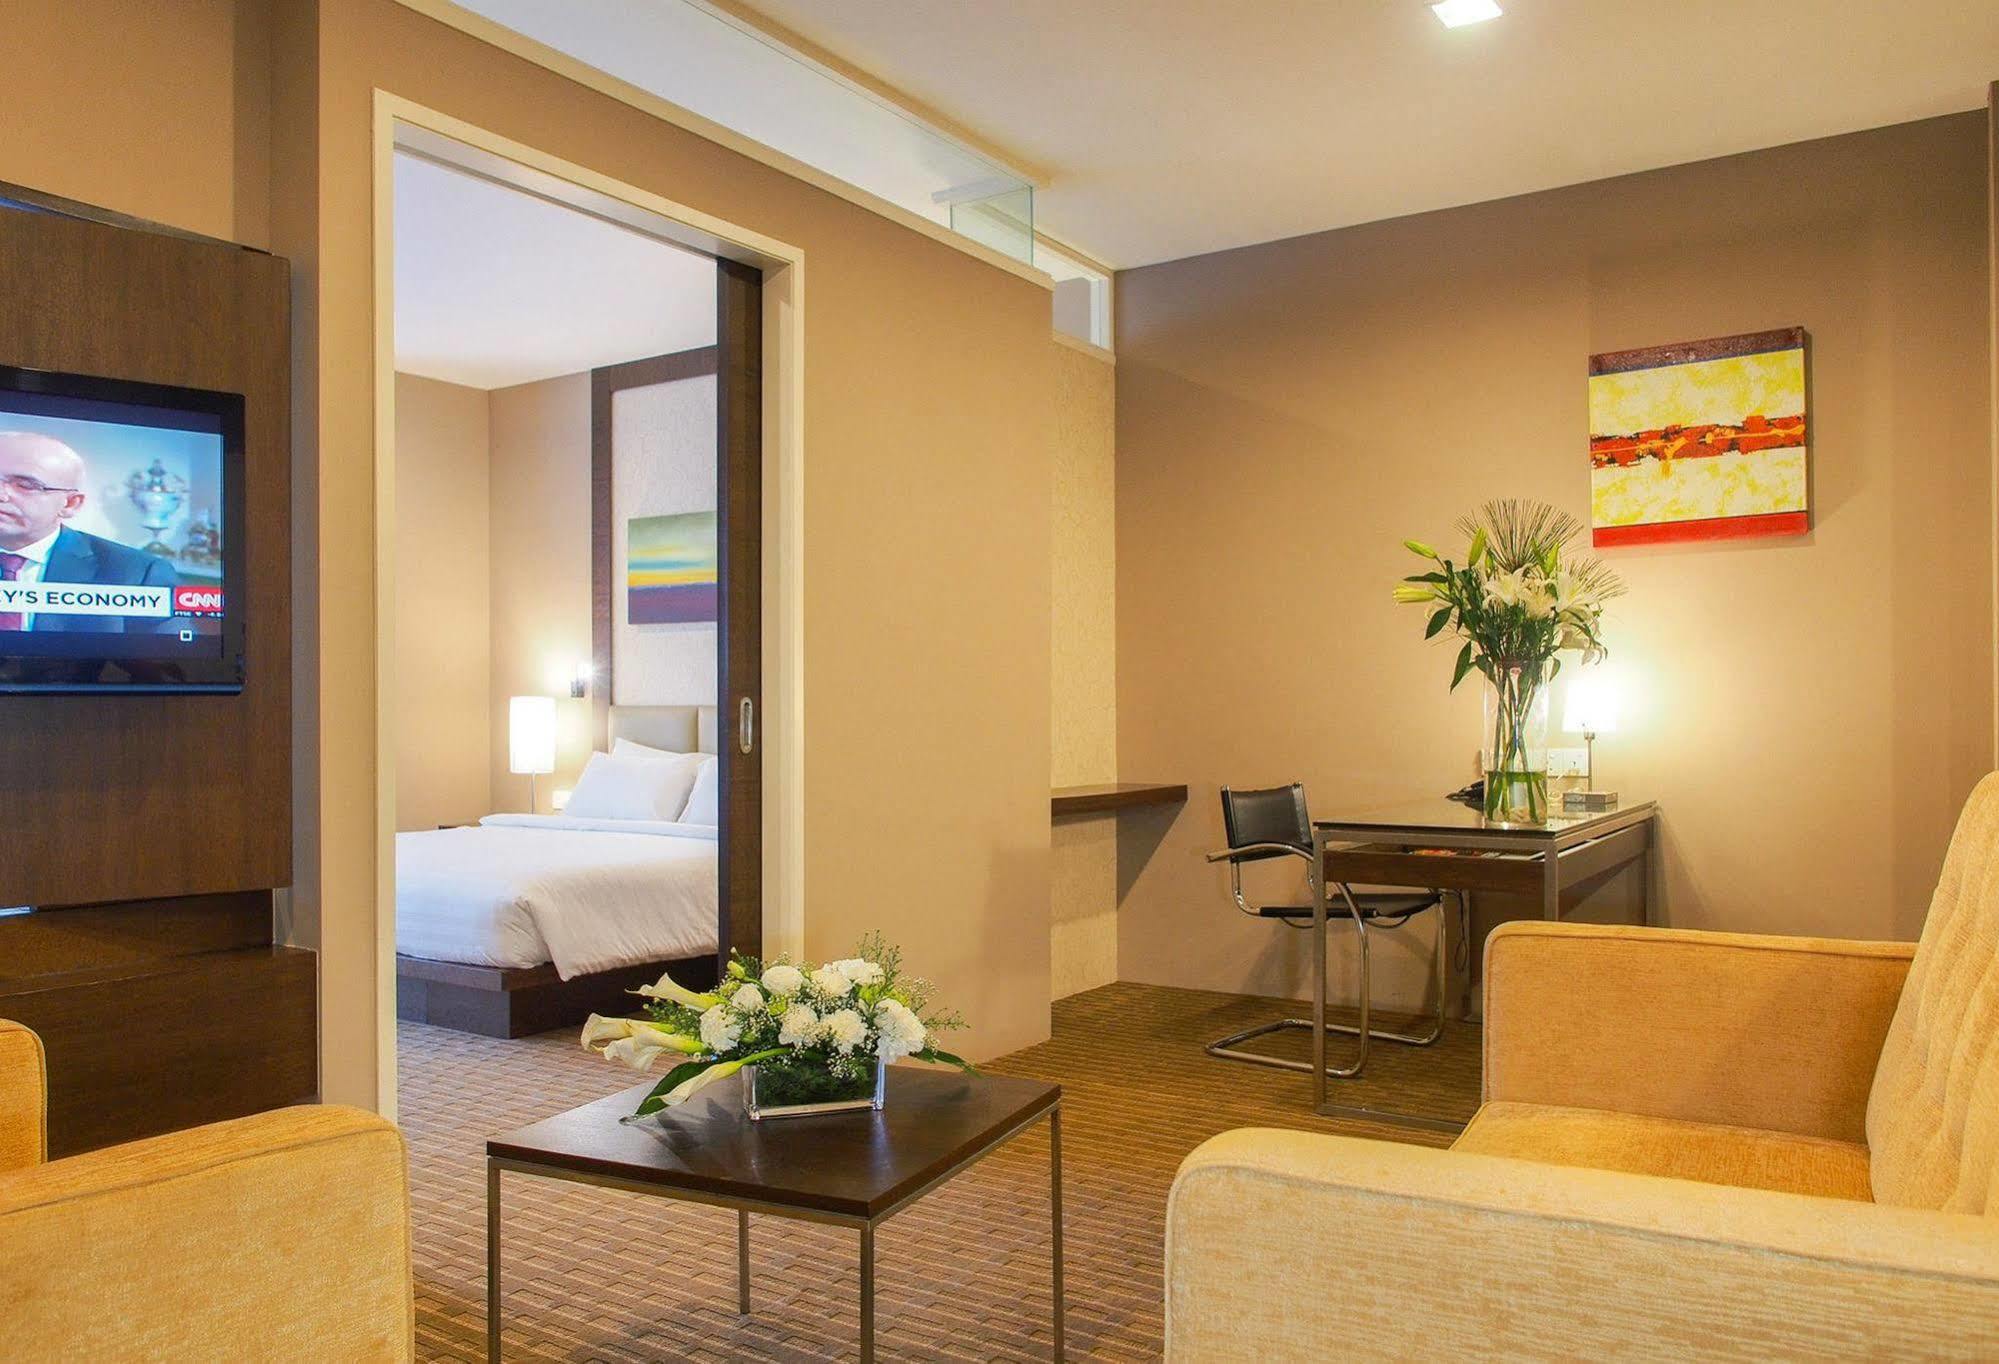 Hotel Primera Suite - Formally Known As Tan Yaa Hotel Cyberjaya ไซเบอร์จายา ภายนอก รูปภาพ